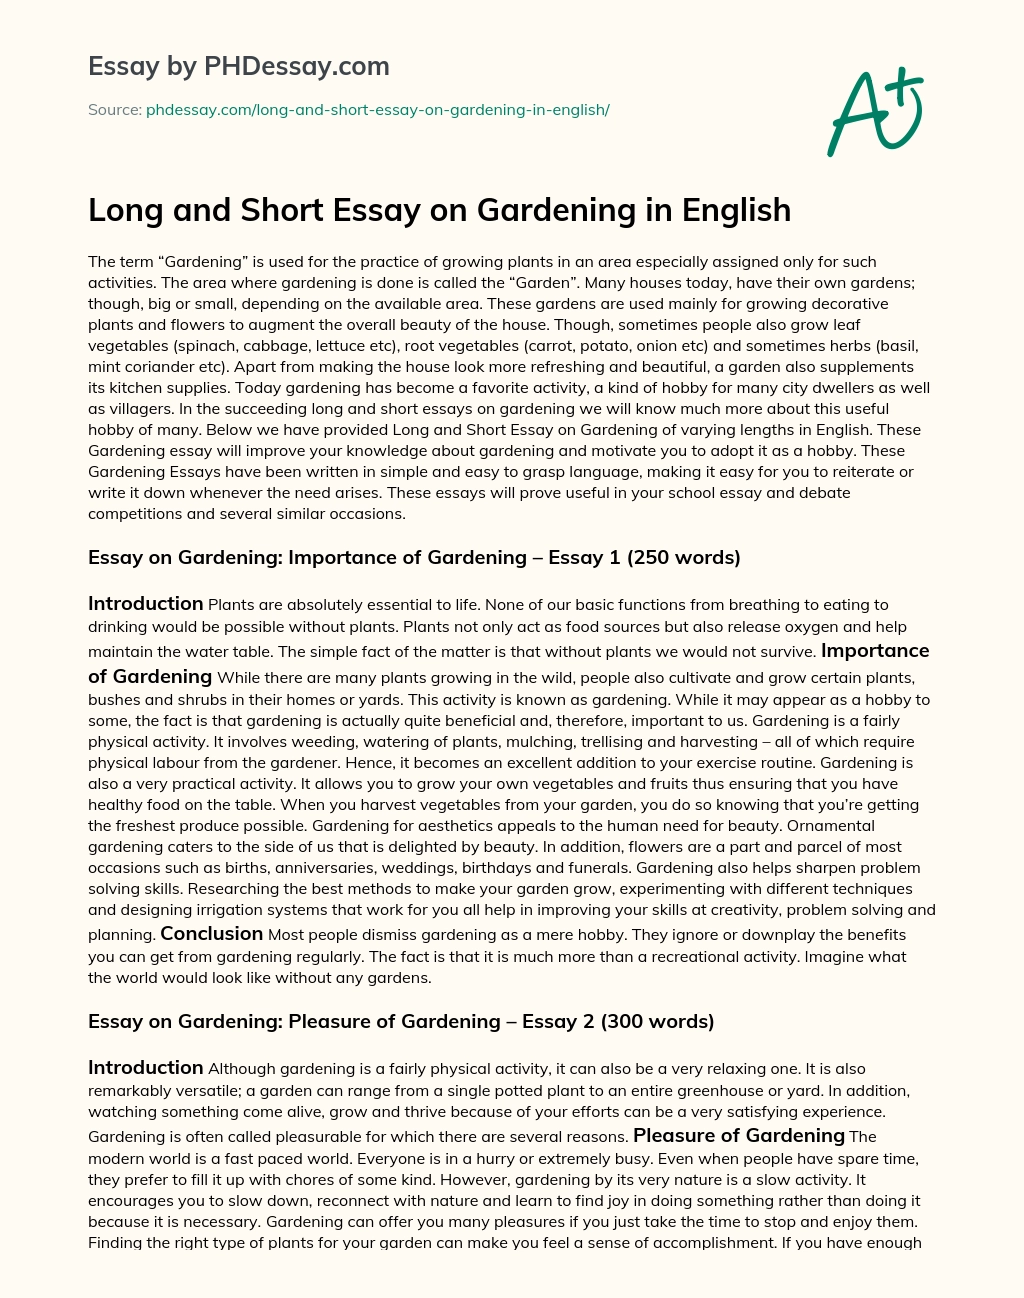 Long and Short Essay on Gardening in English essay